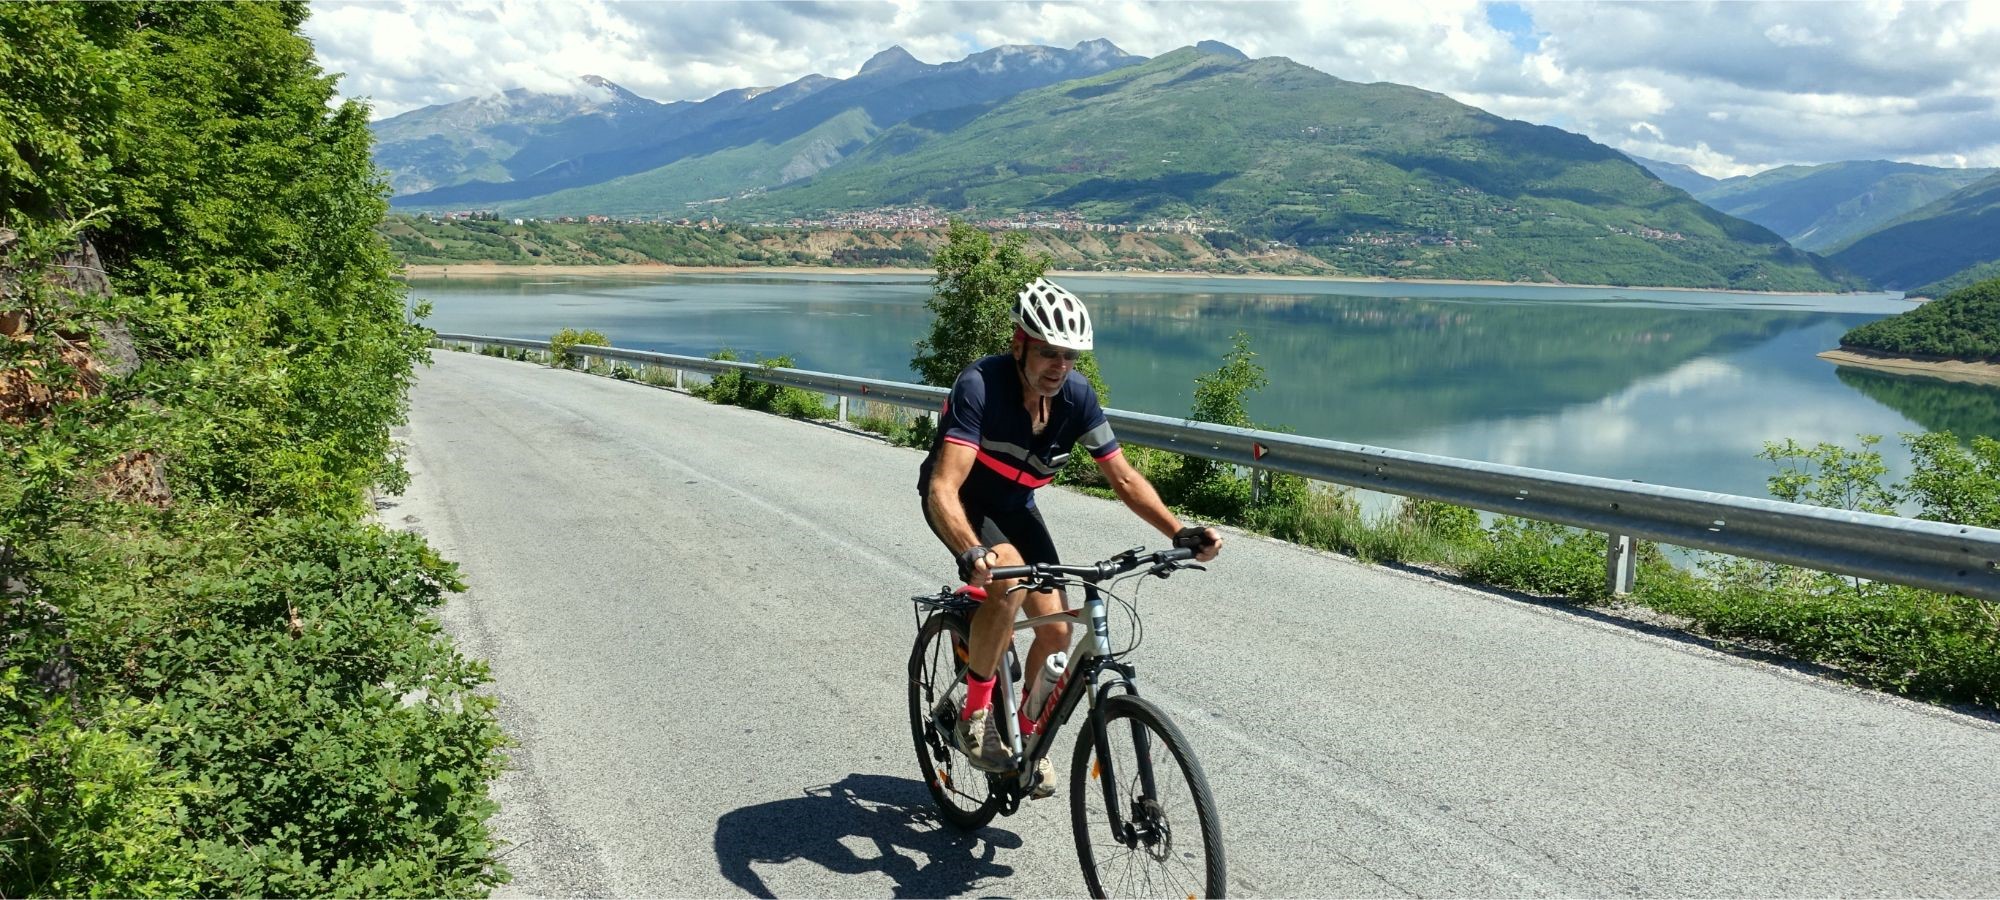 cycling holidays Albania